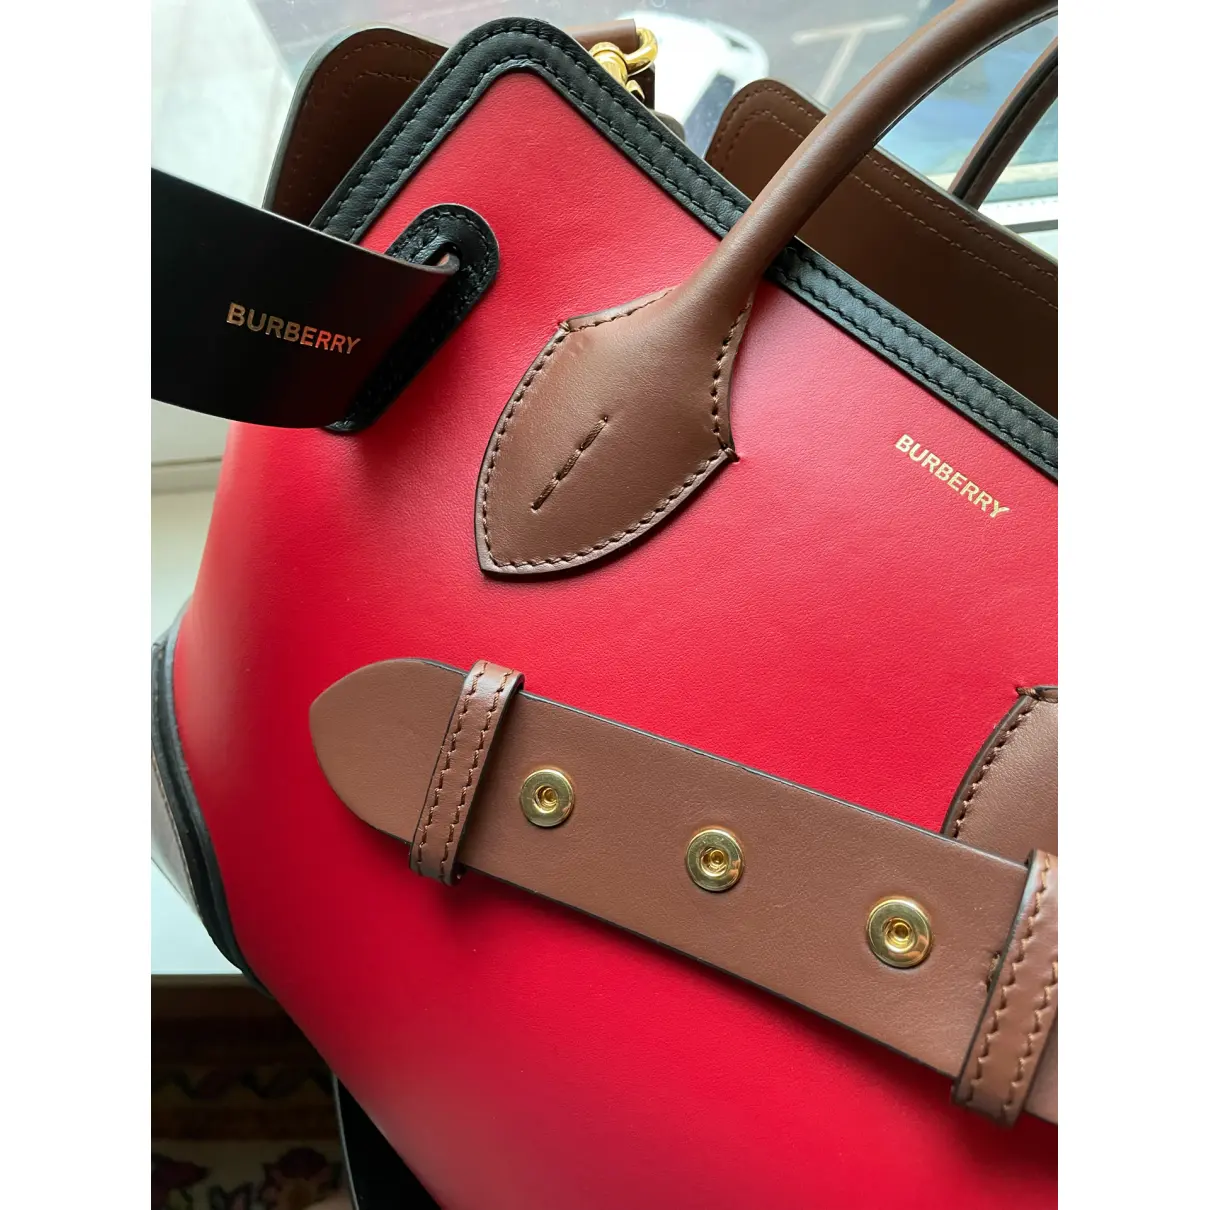 Buy Burberry The Belt leather handbag online